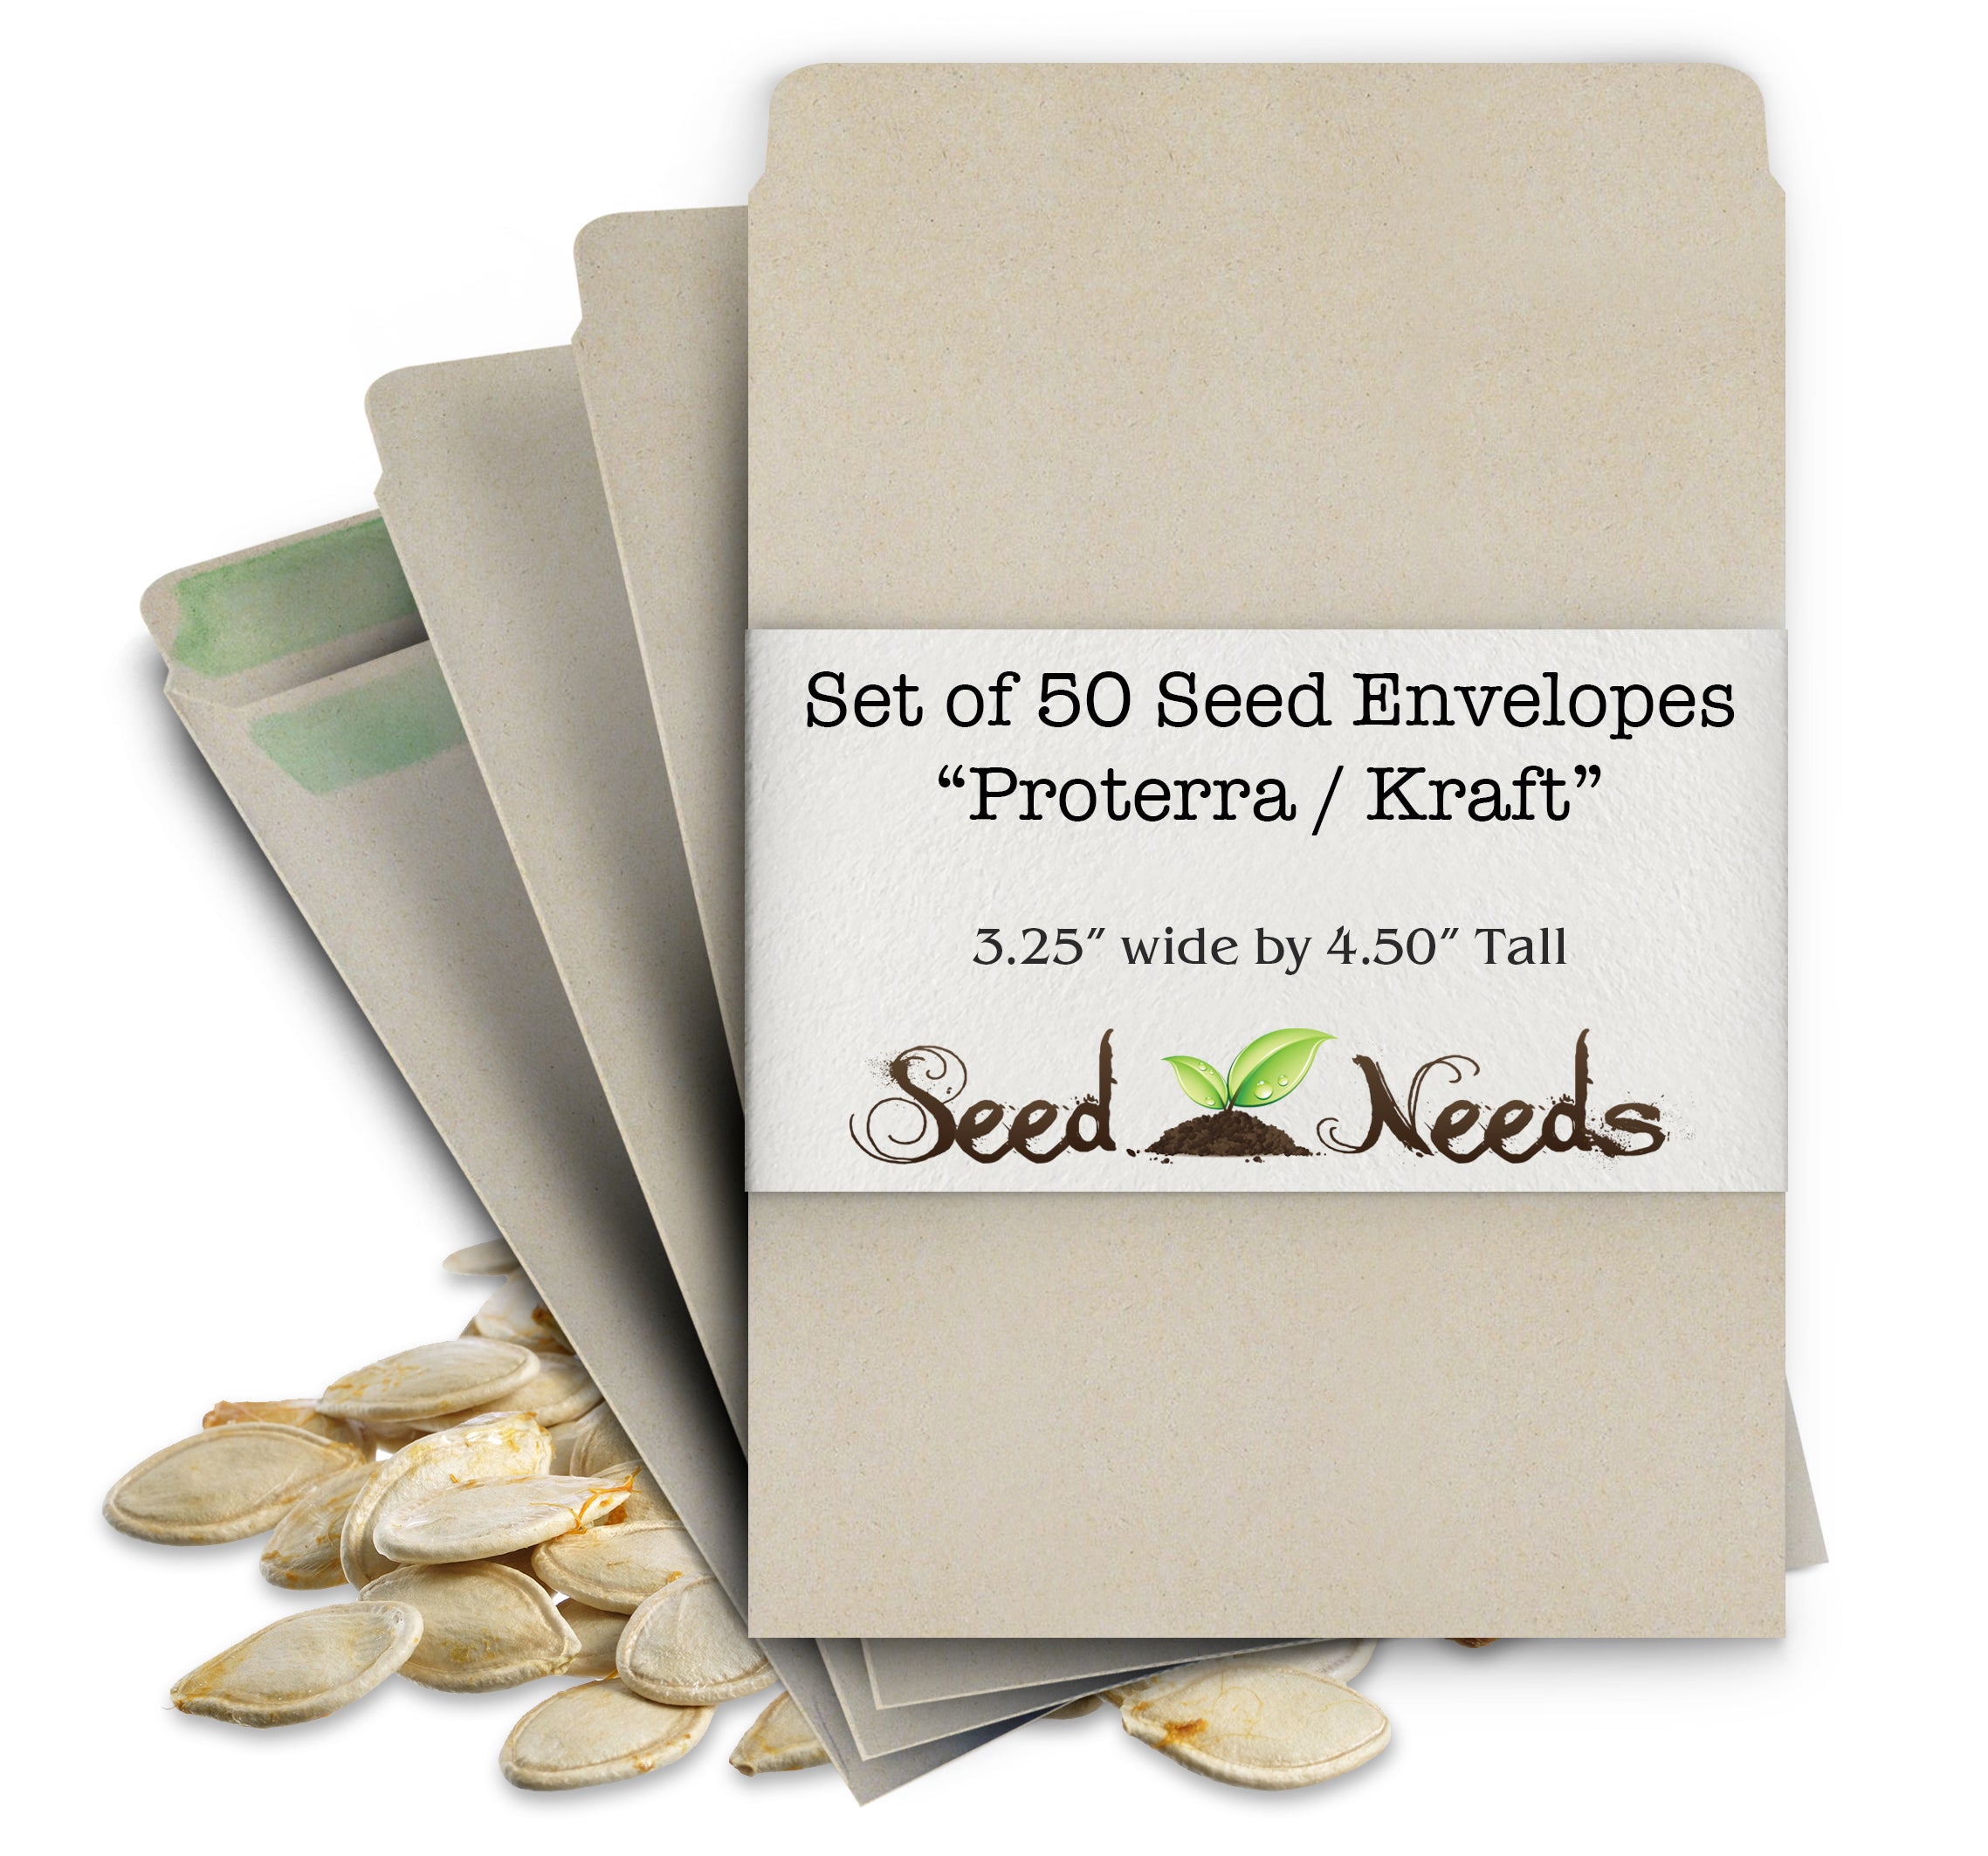 Seed Needs, Proterra / Kraft Seed Envelopes 